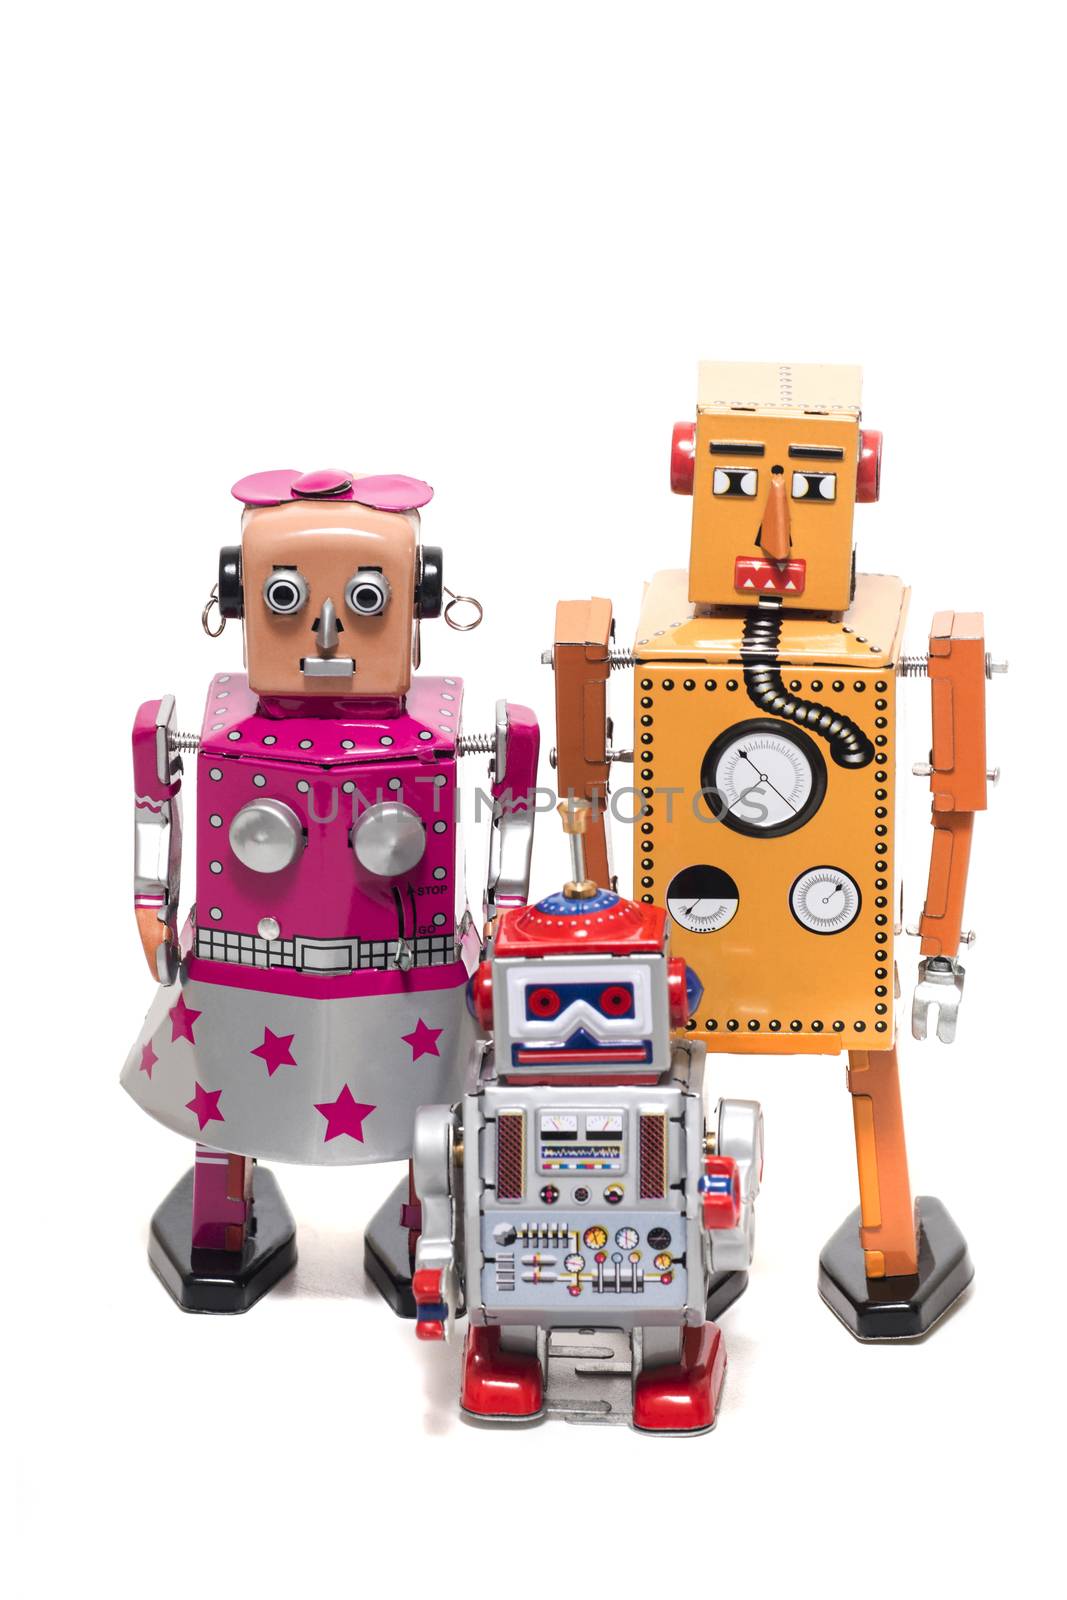 tin toy robot family by membio